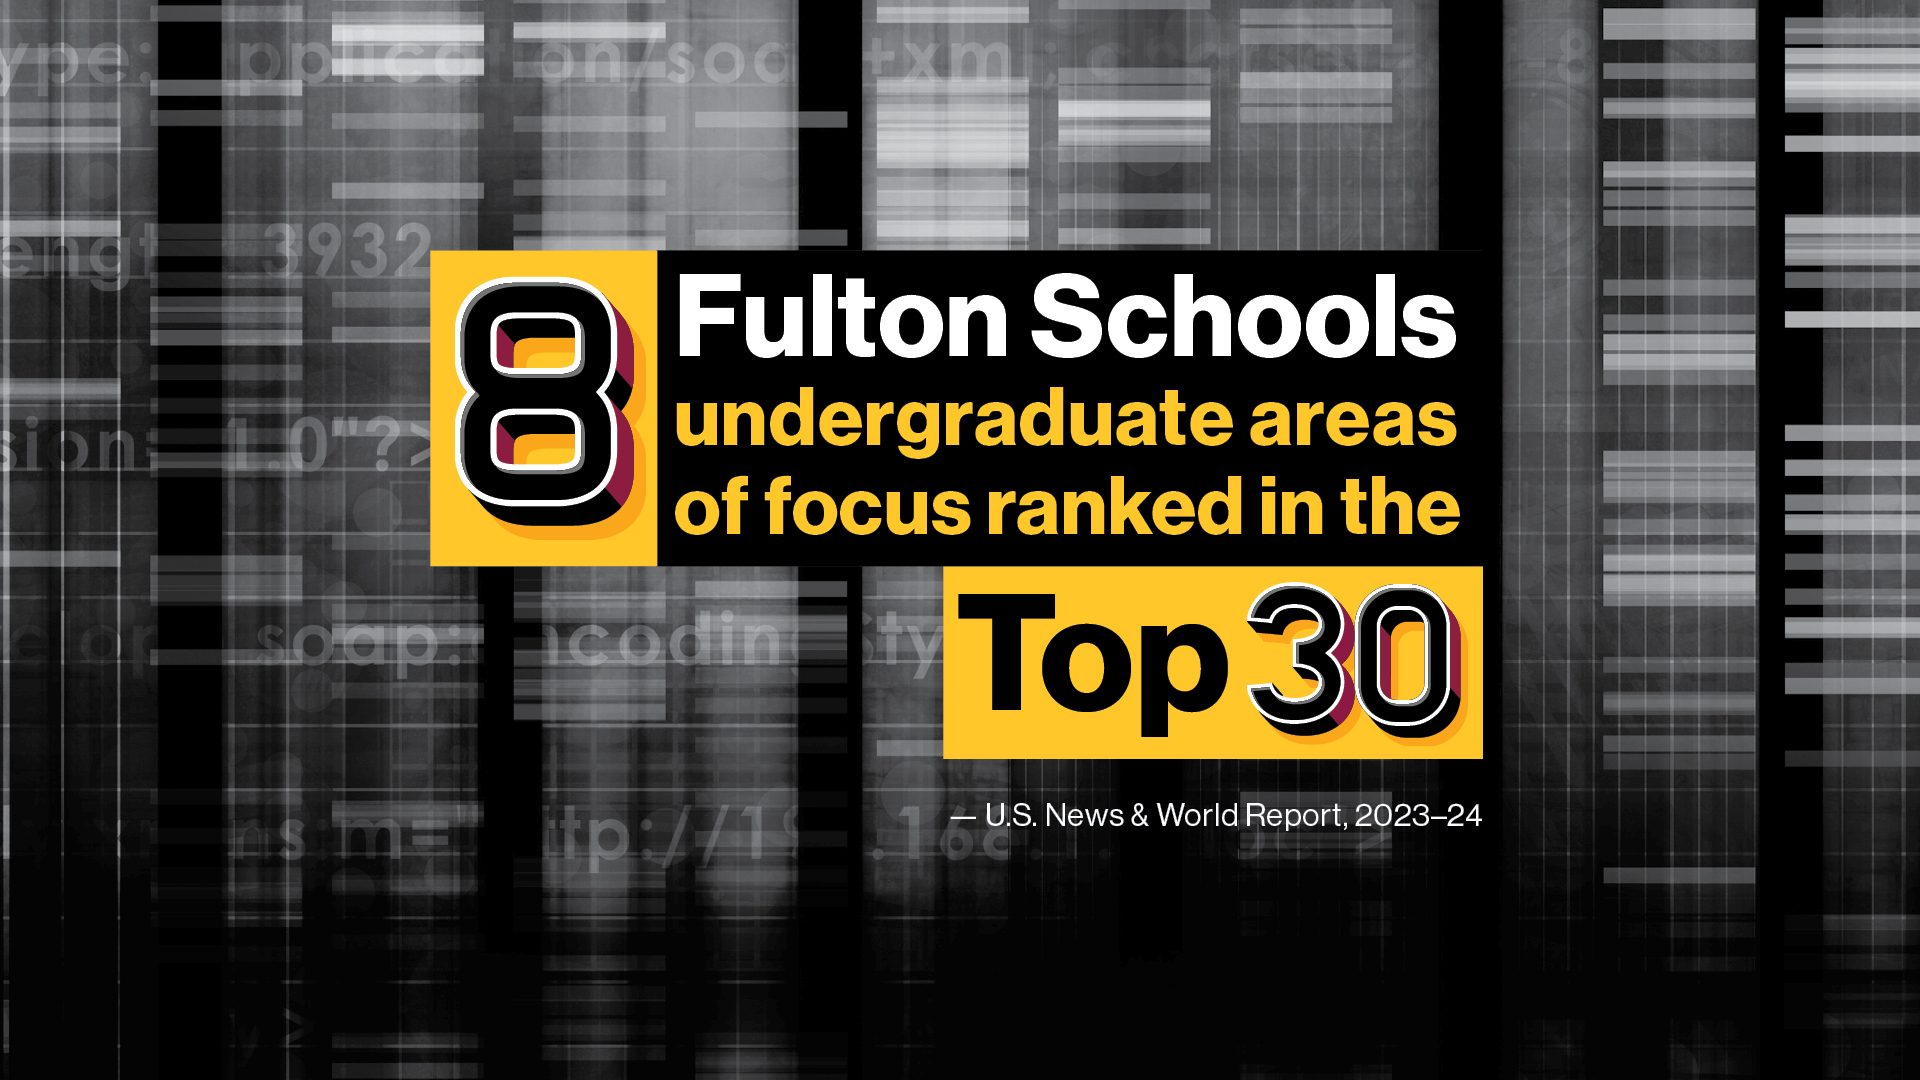 8 Fulton Schools undergraduate areas of focus ranked in the Top 30